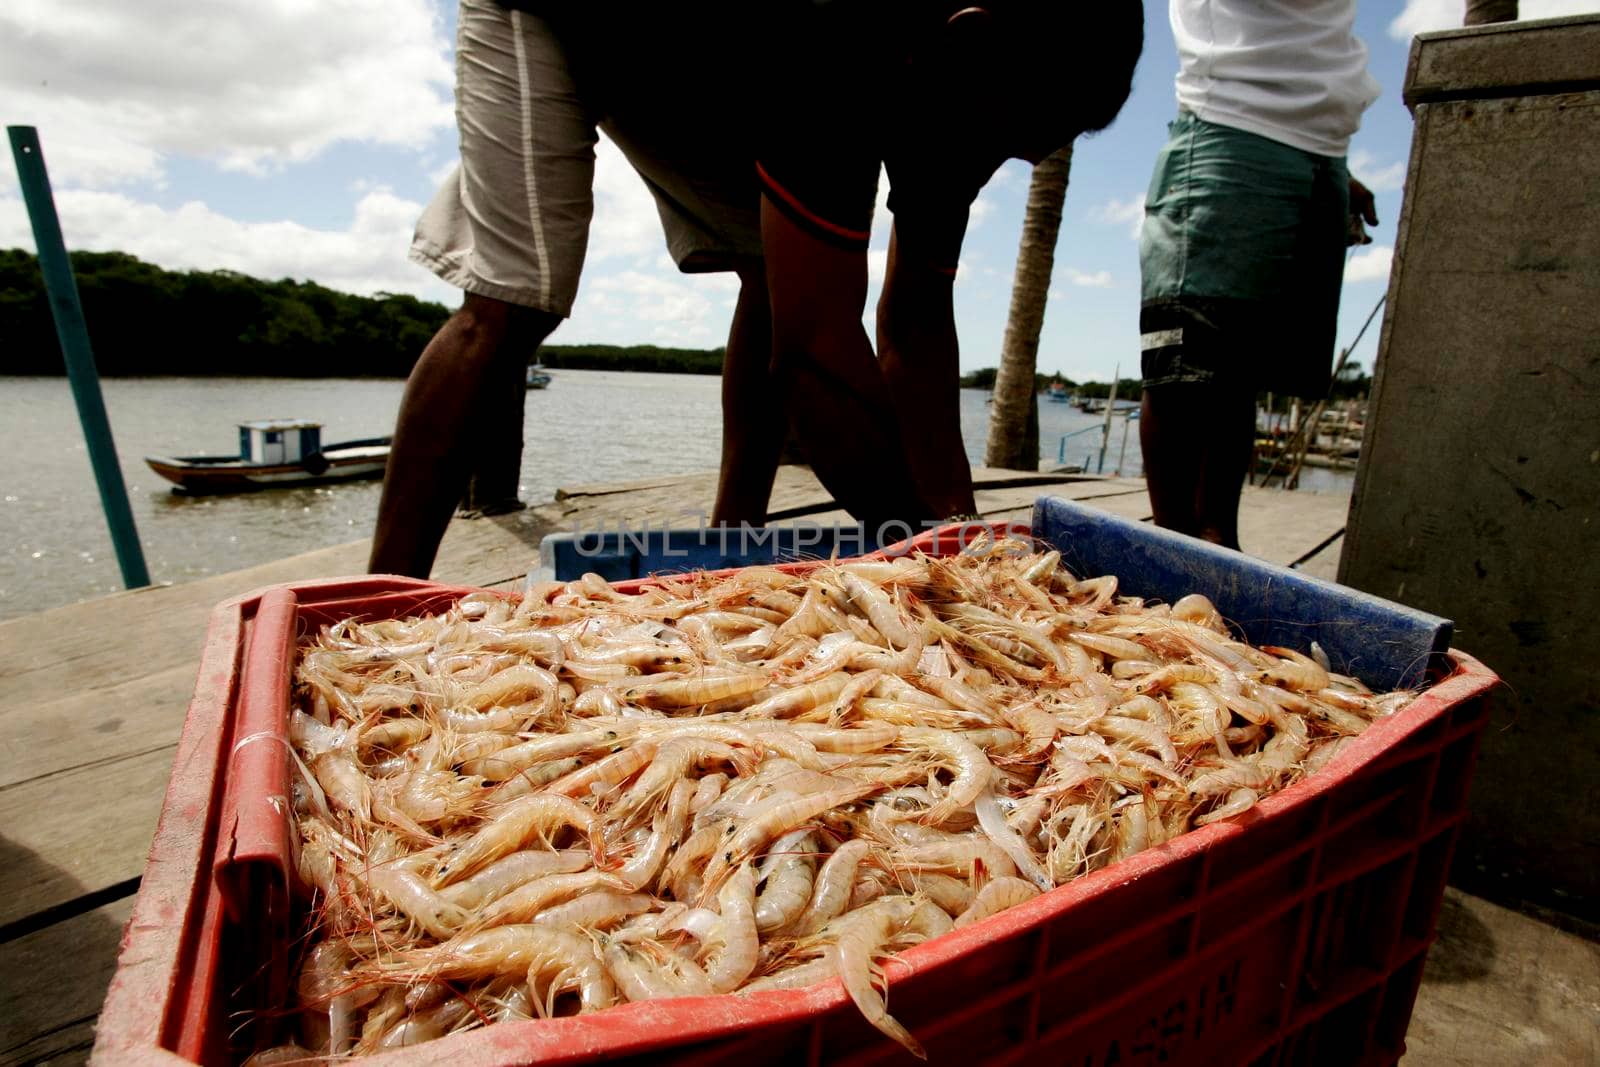 nova vicosa, bahia / brazil - july 8, 2009: fisherman shows shrimp caught in the sea in the Nova Vicosa region, in southern Bahia.